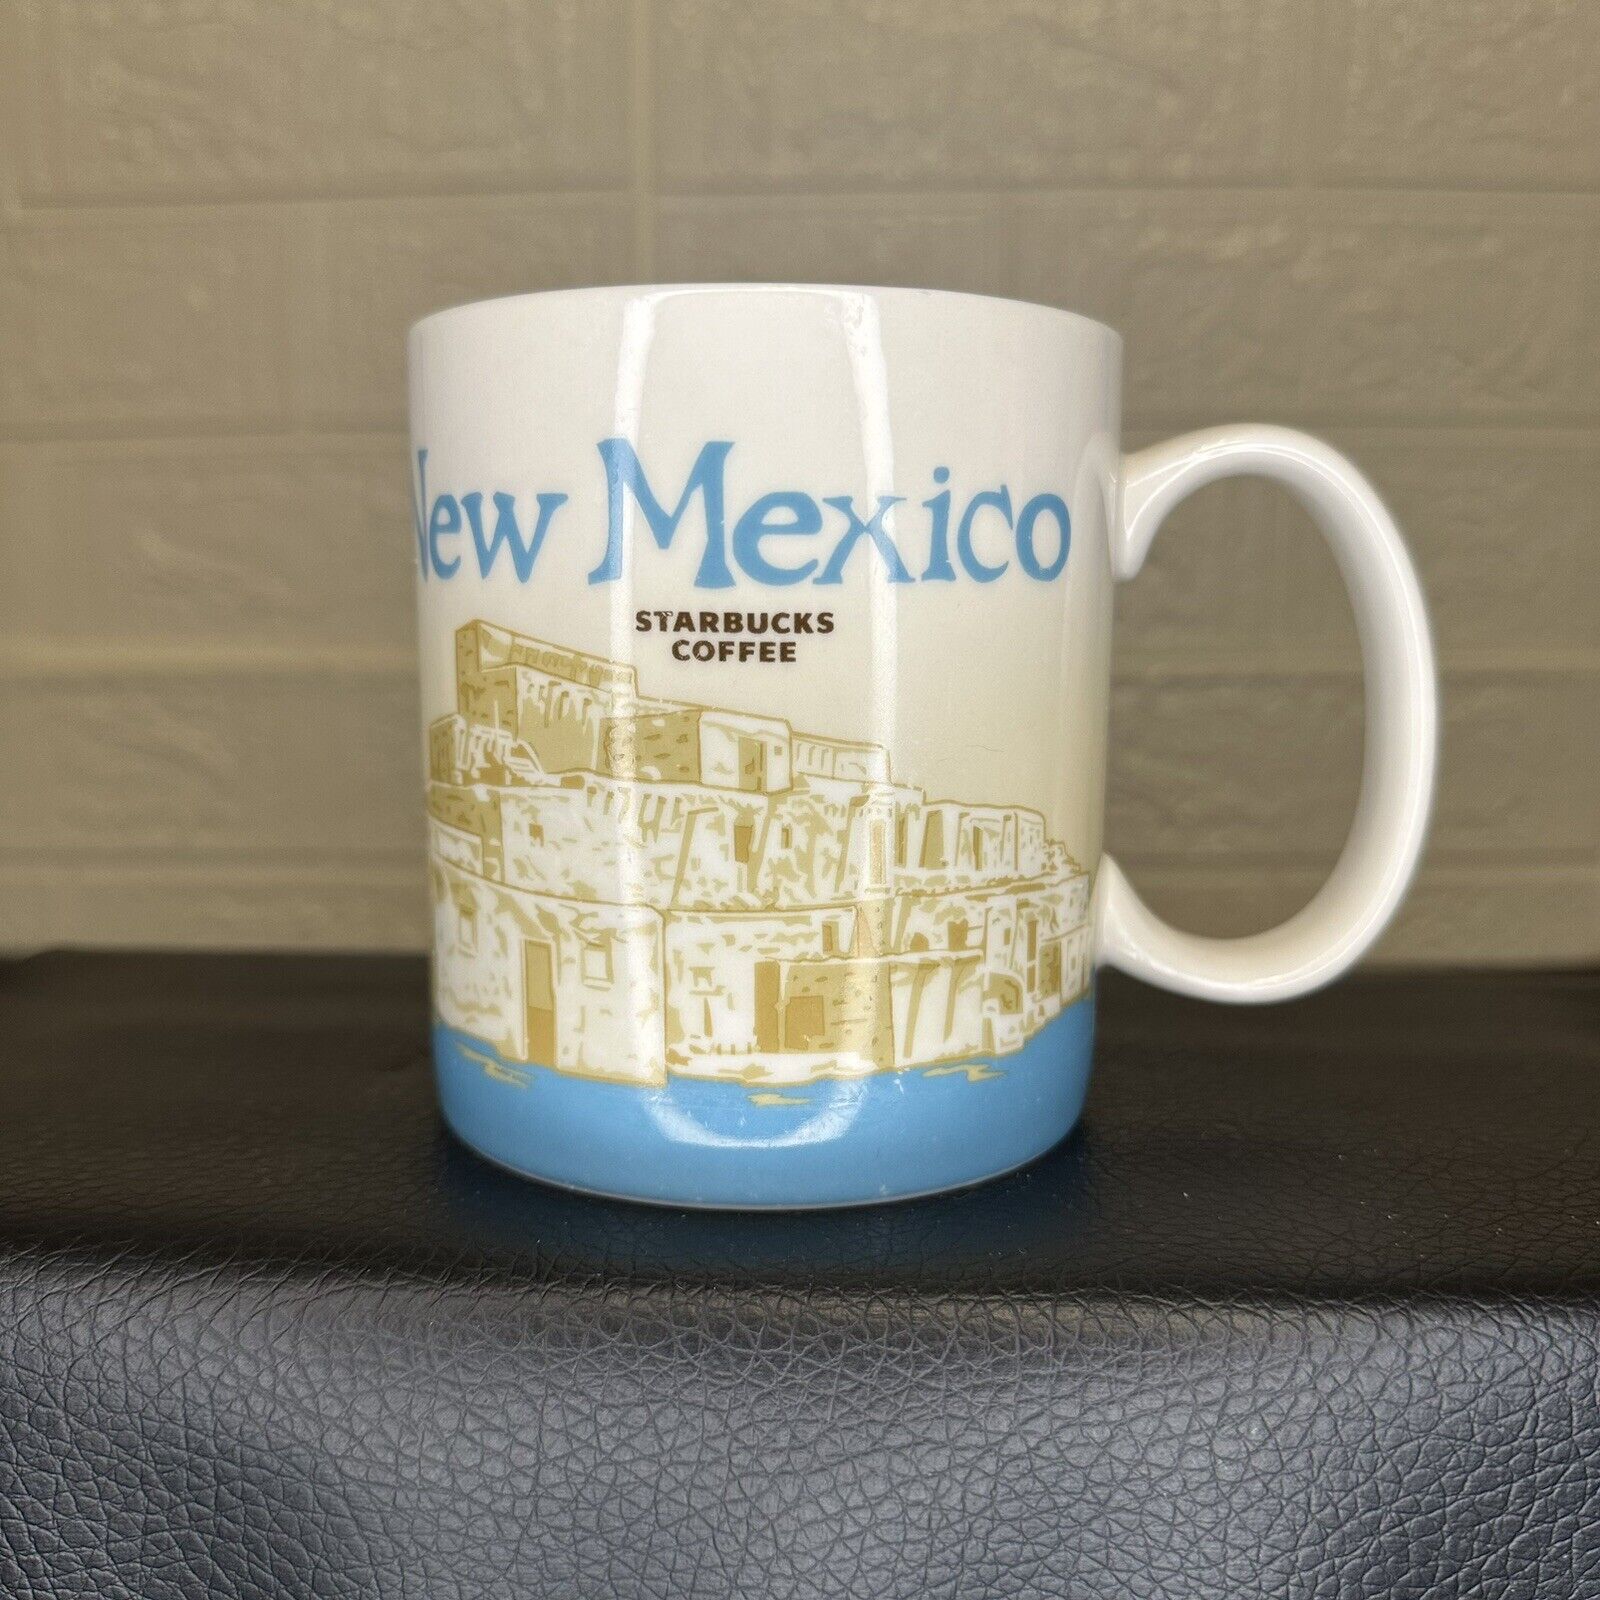 New Mexico Starbucks Mug Collectors Series 2010 16 oz